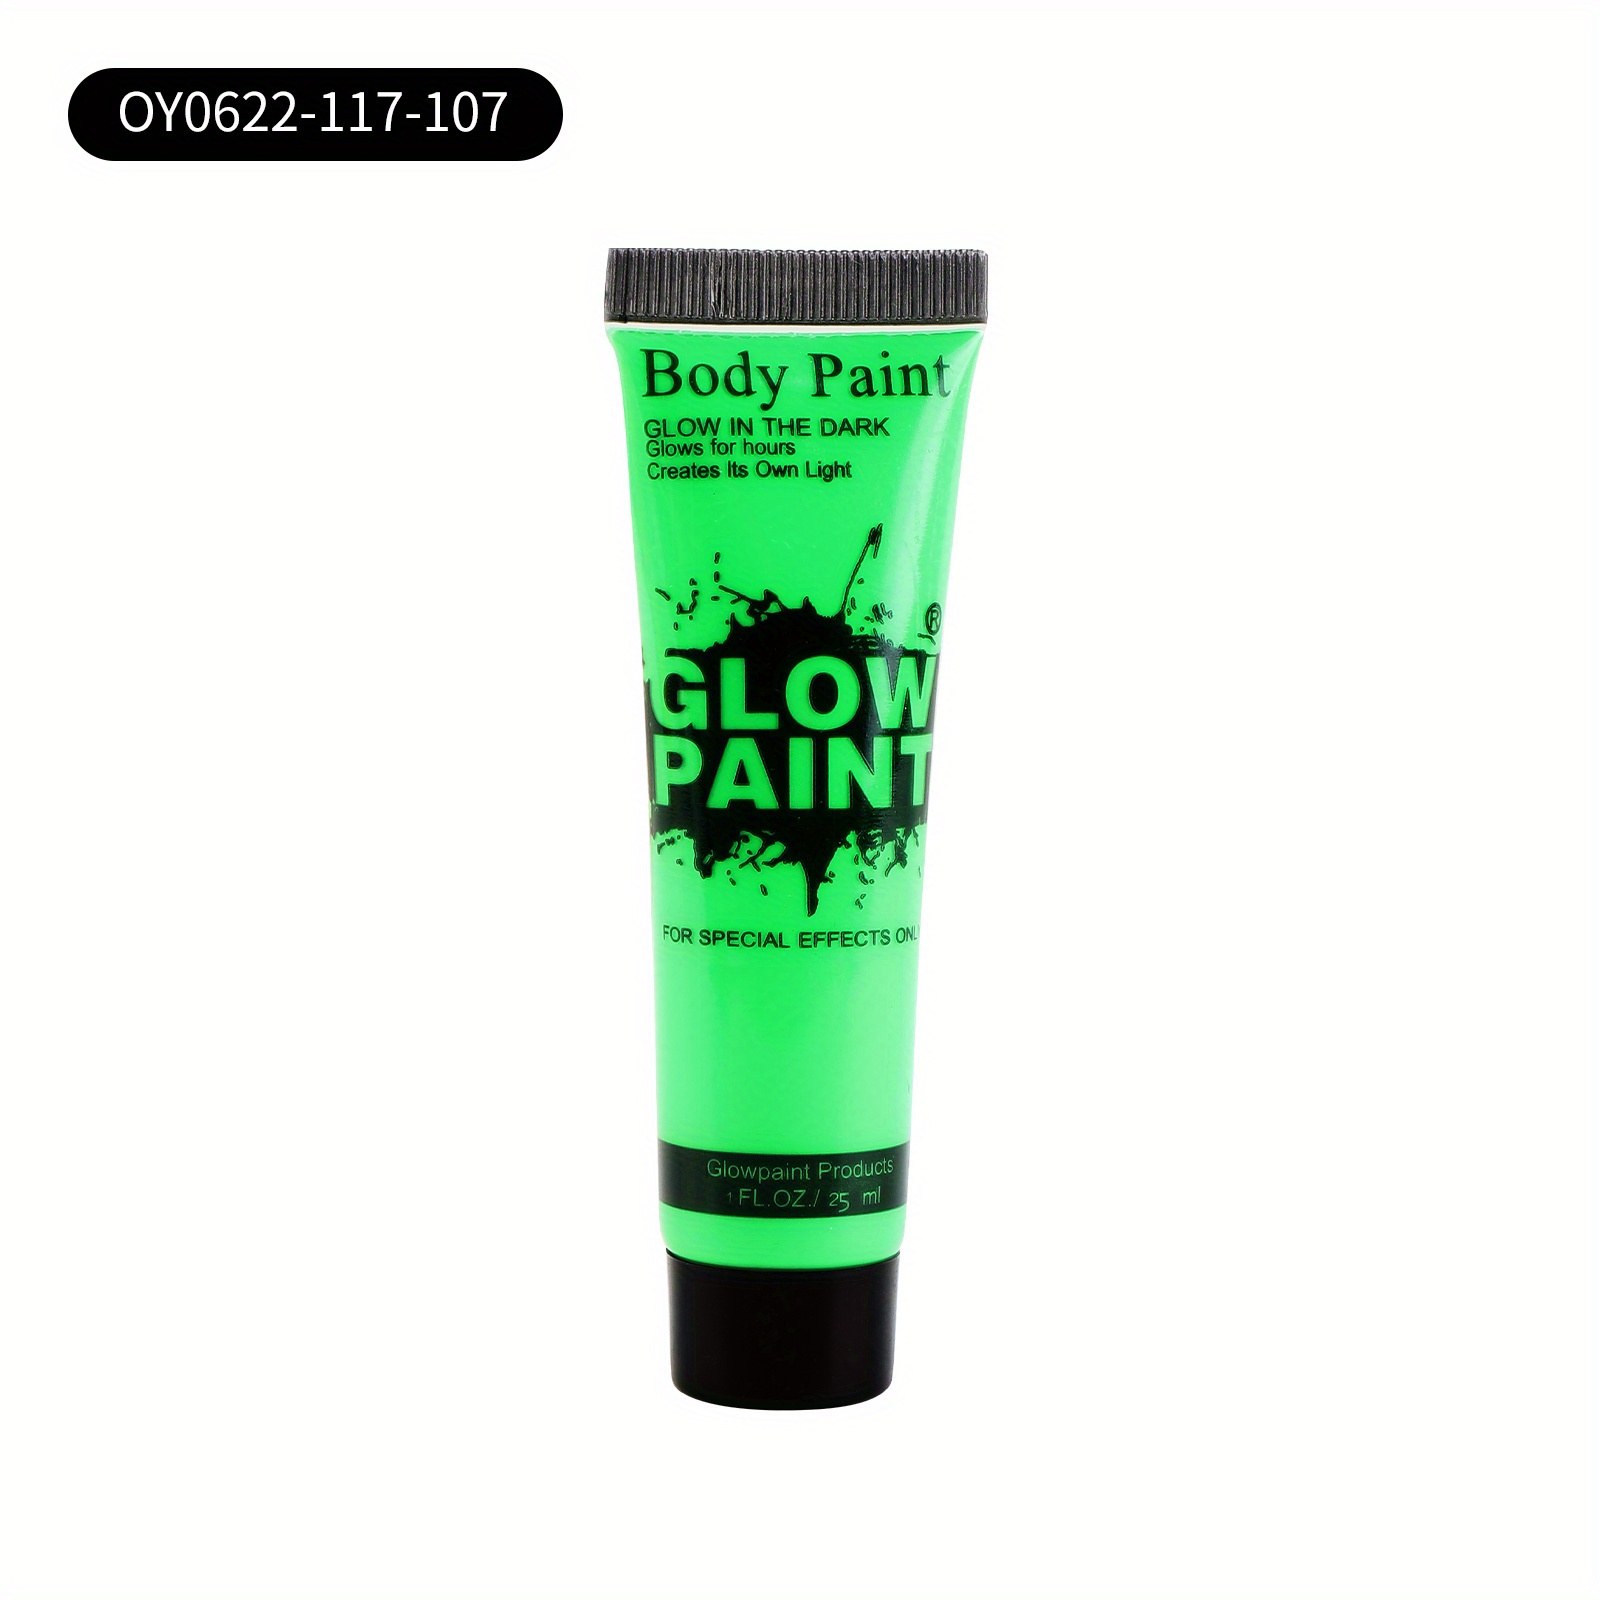 UV Body Paint Set, 6 Tubes Set 10ml / 0.34oz UV Neon Face & Body Paint Neon  Fluorescent UV Blacklight Glow Safe Non-Toxic Bodypaint For Halloween